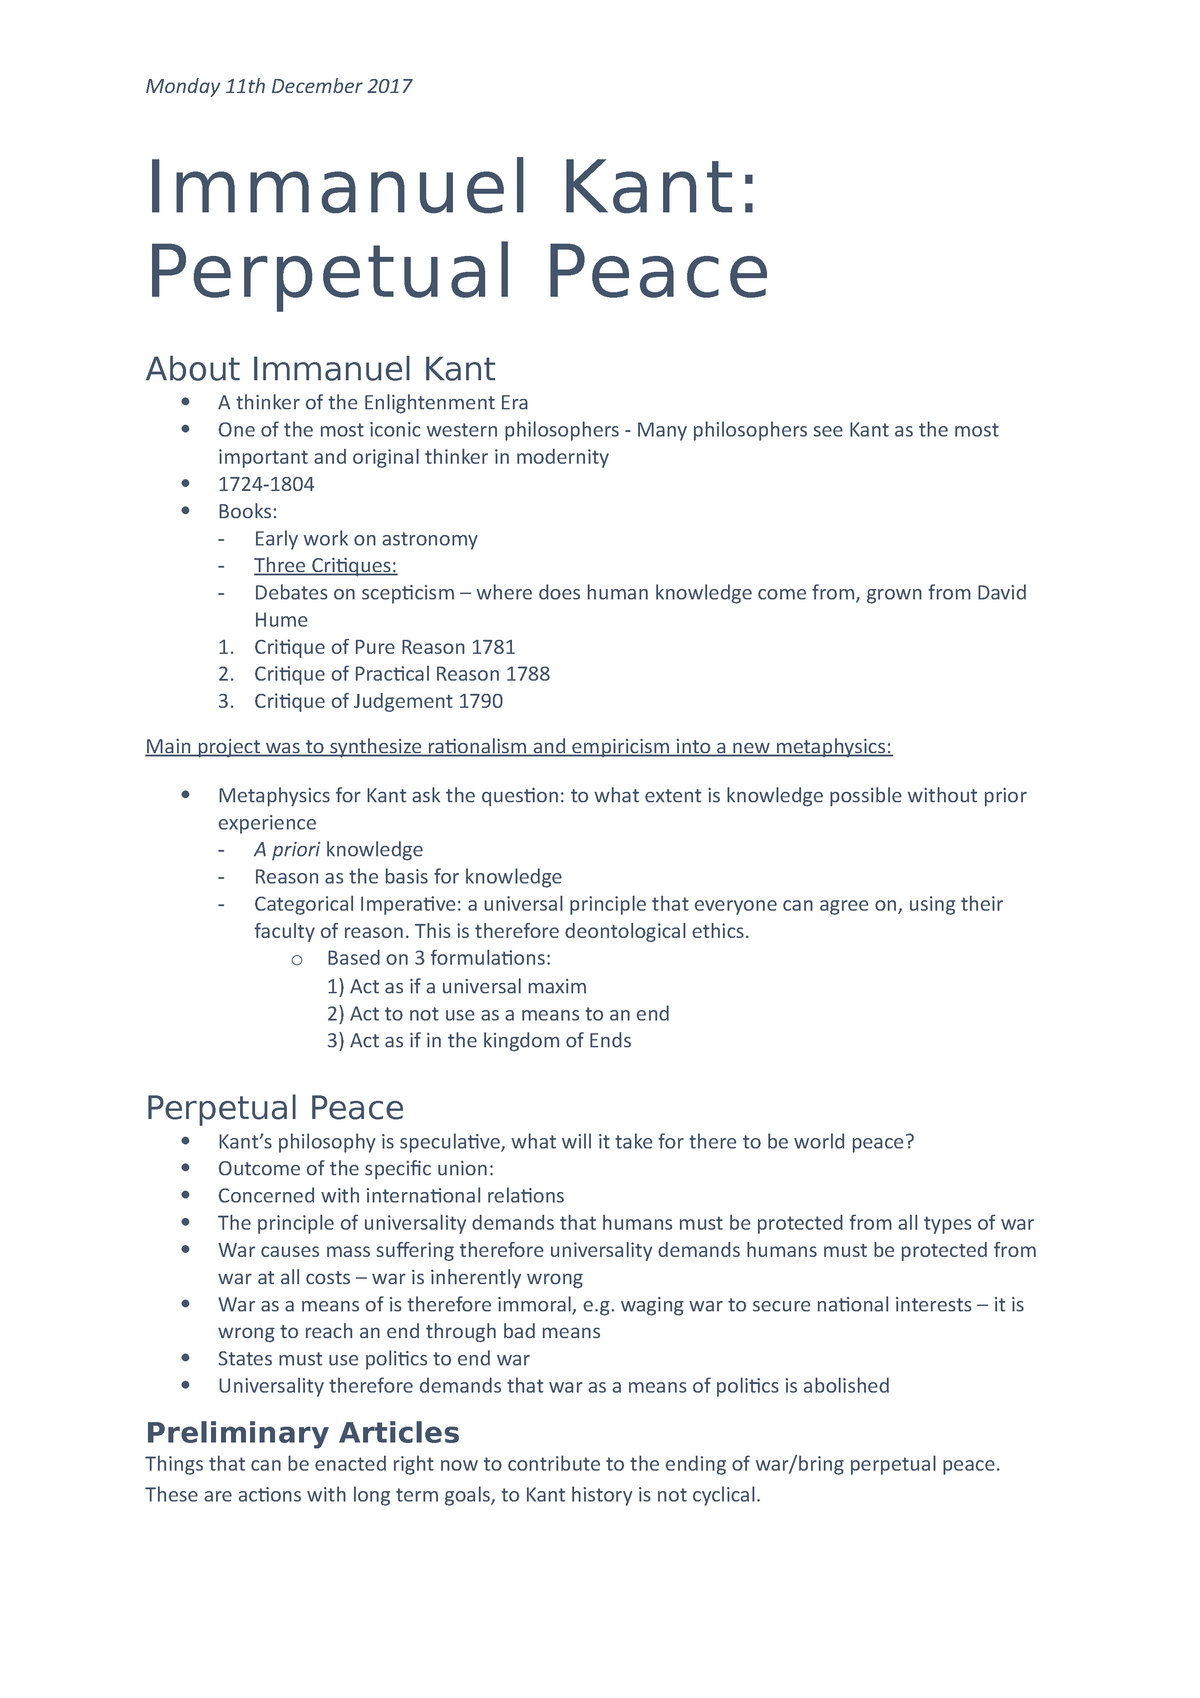 kant perpetual peace summary